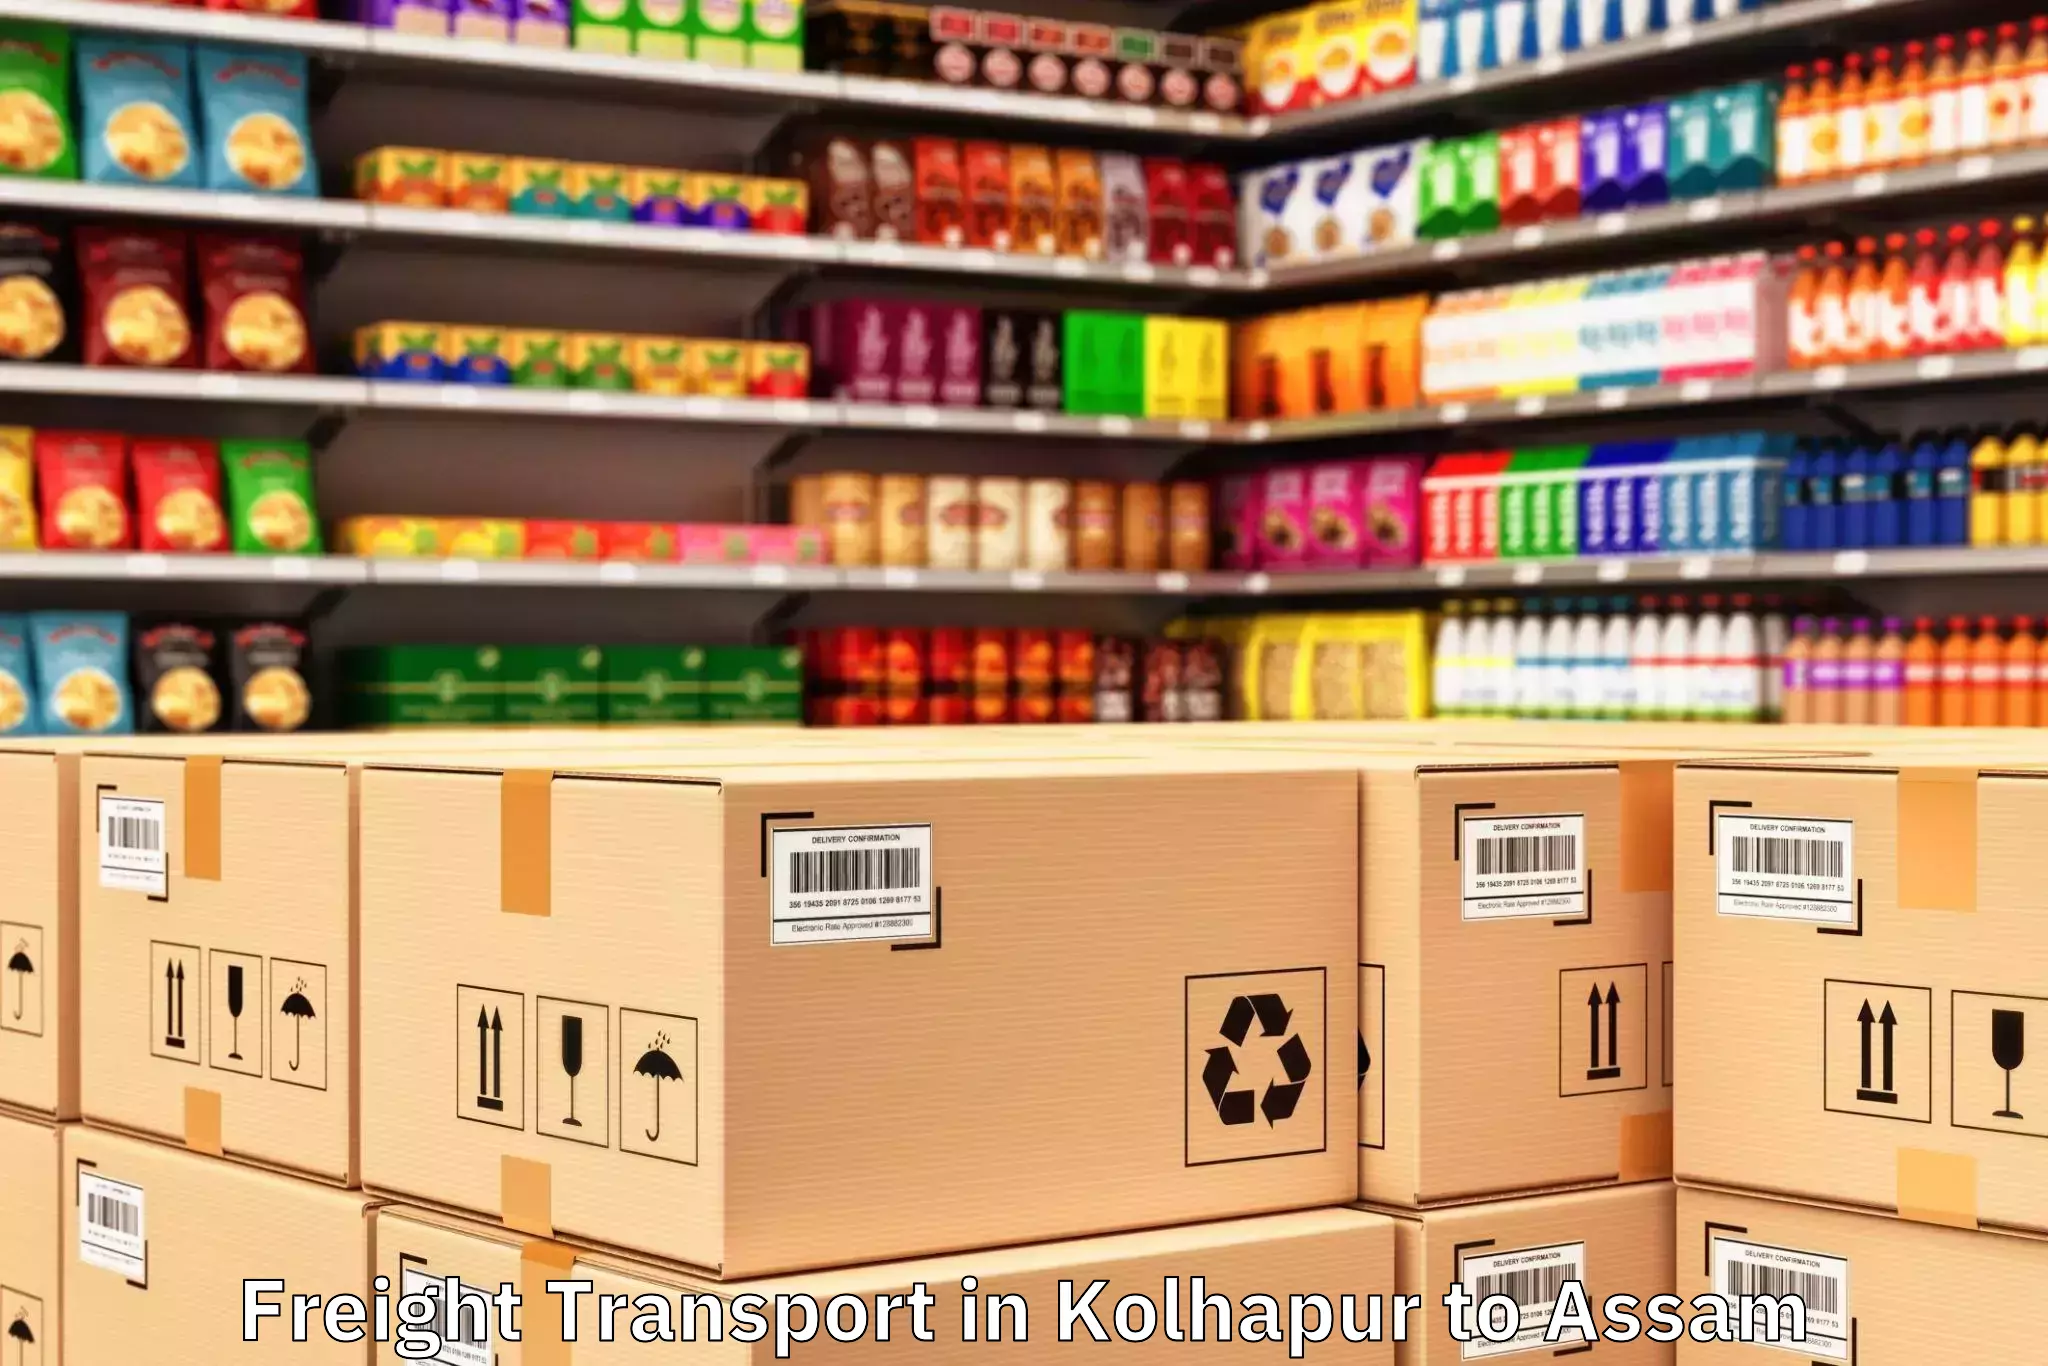 Quality Kolhapur to Dhubri Freight Transport